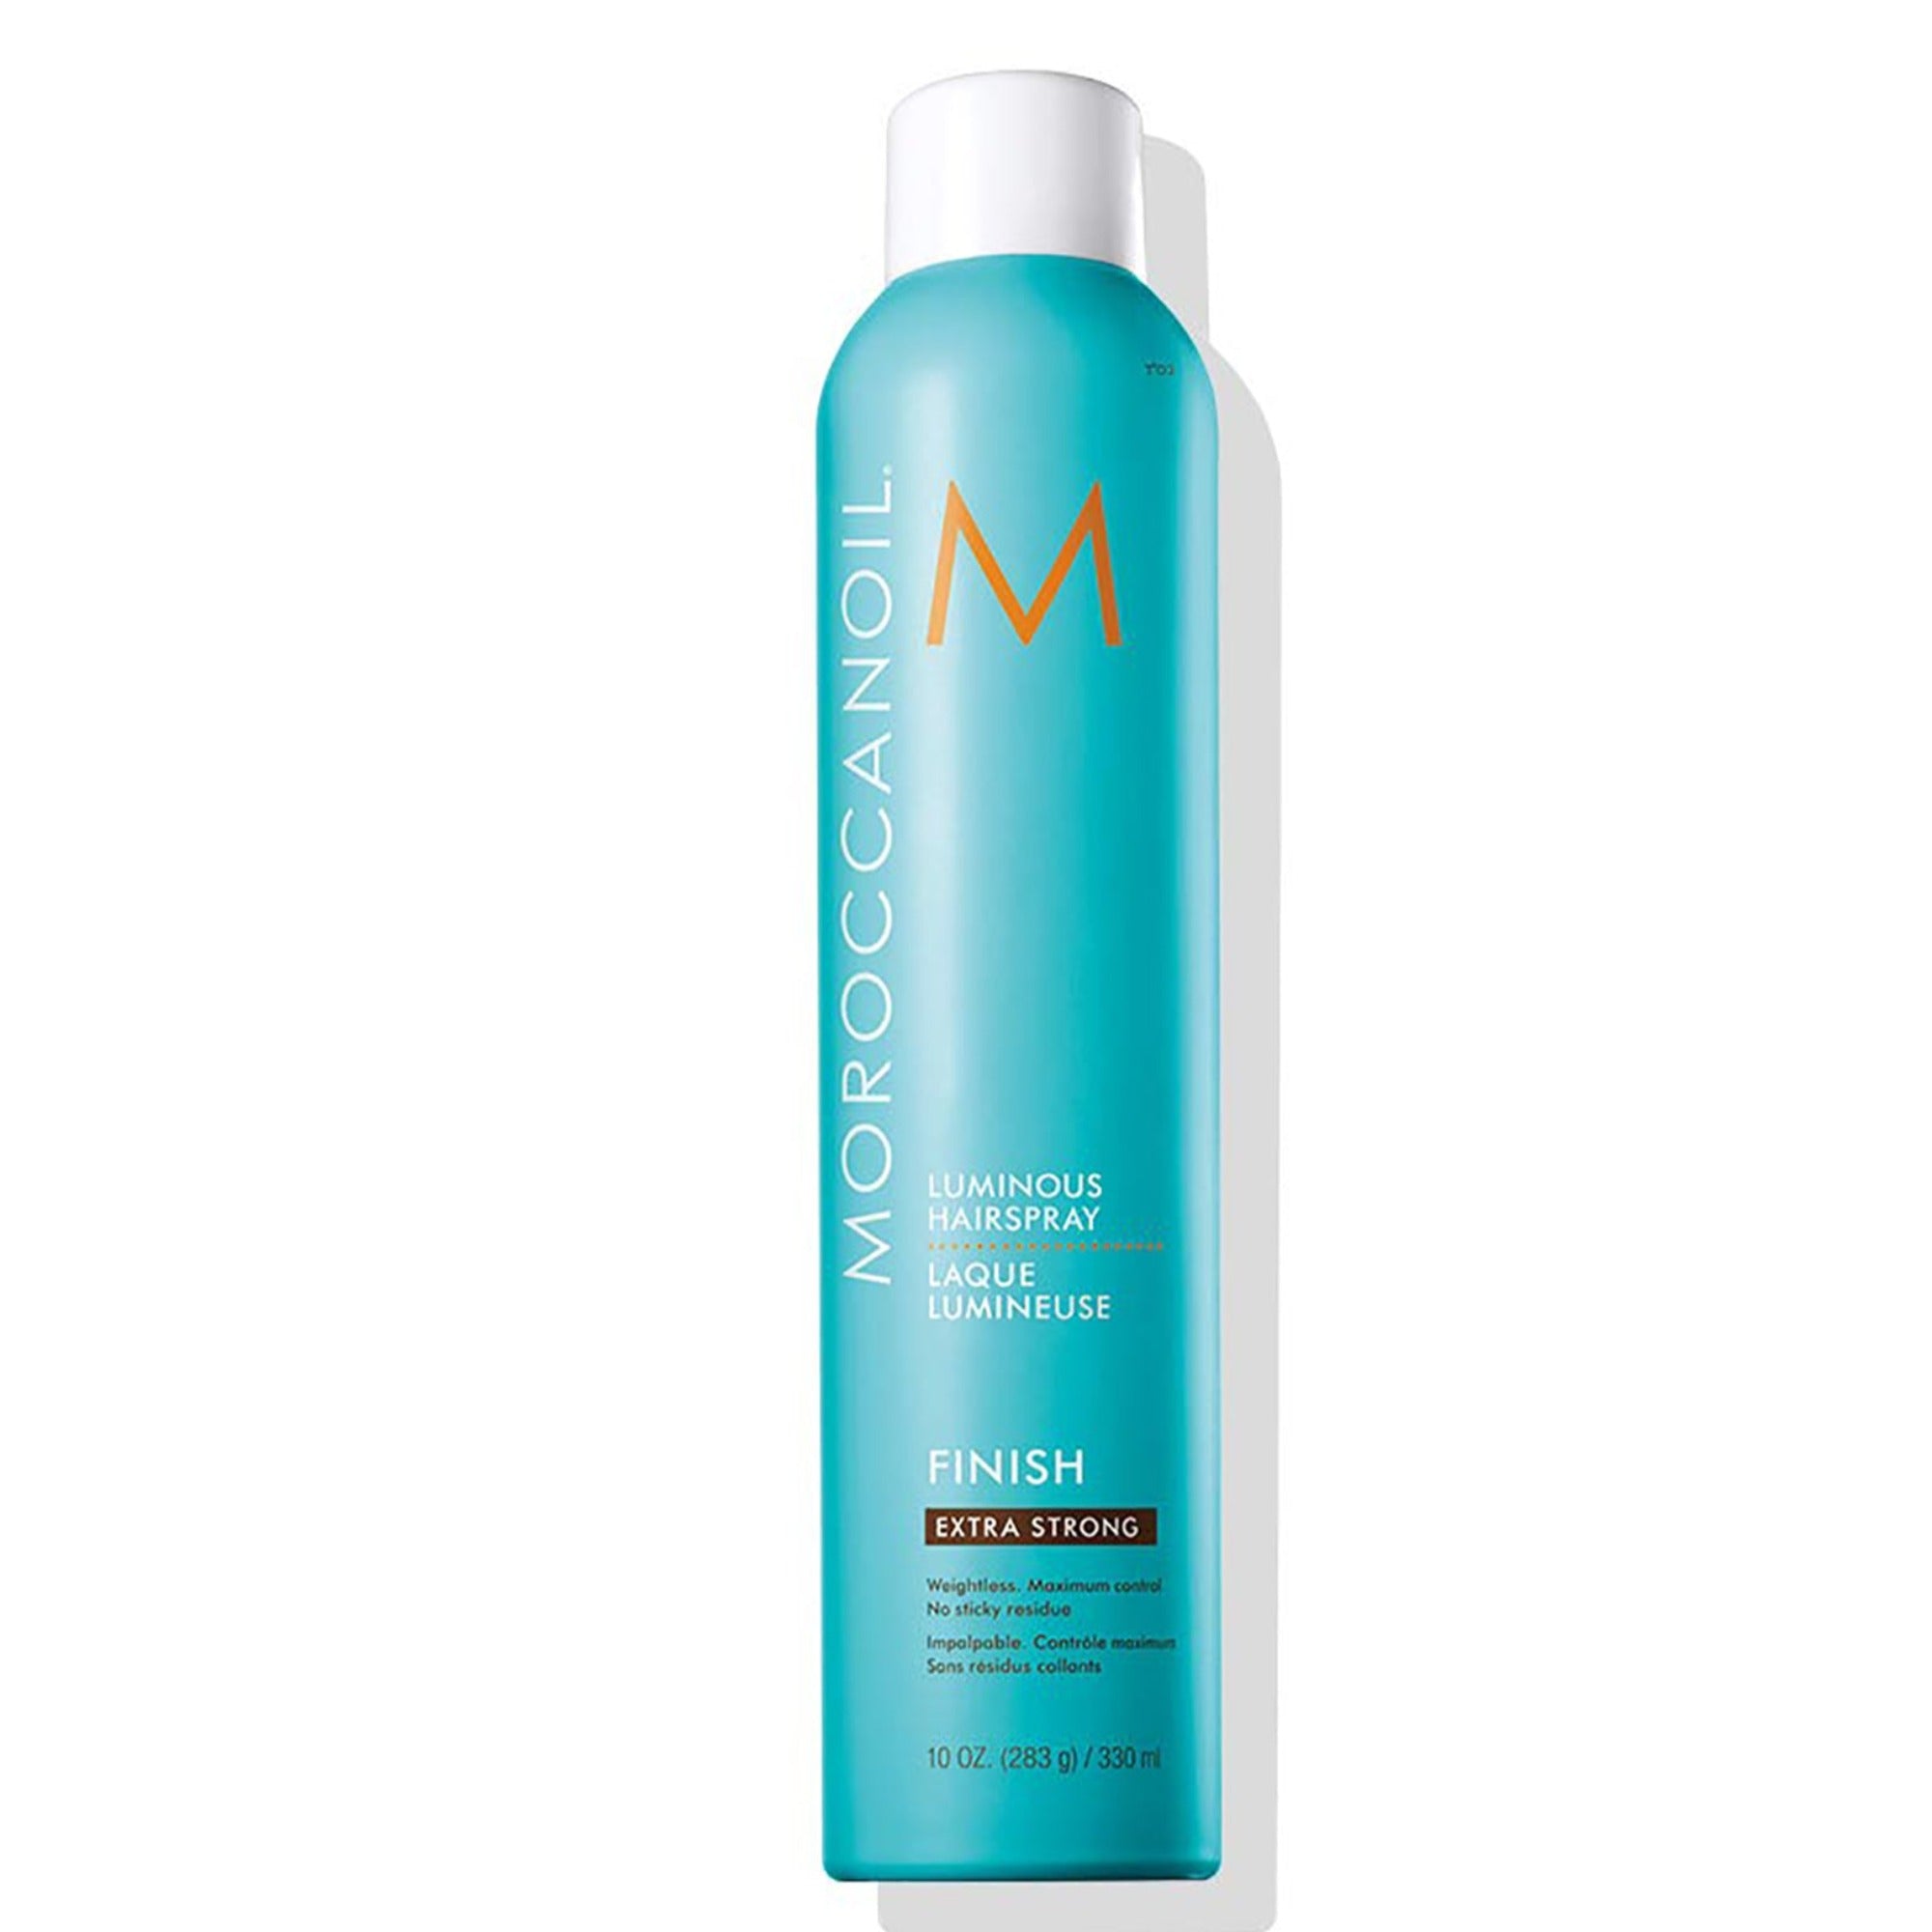 MoroccanOil Luminous Hairspray Extra Strong / 10.OZ